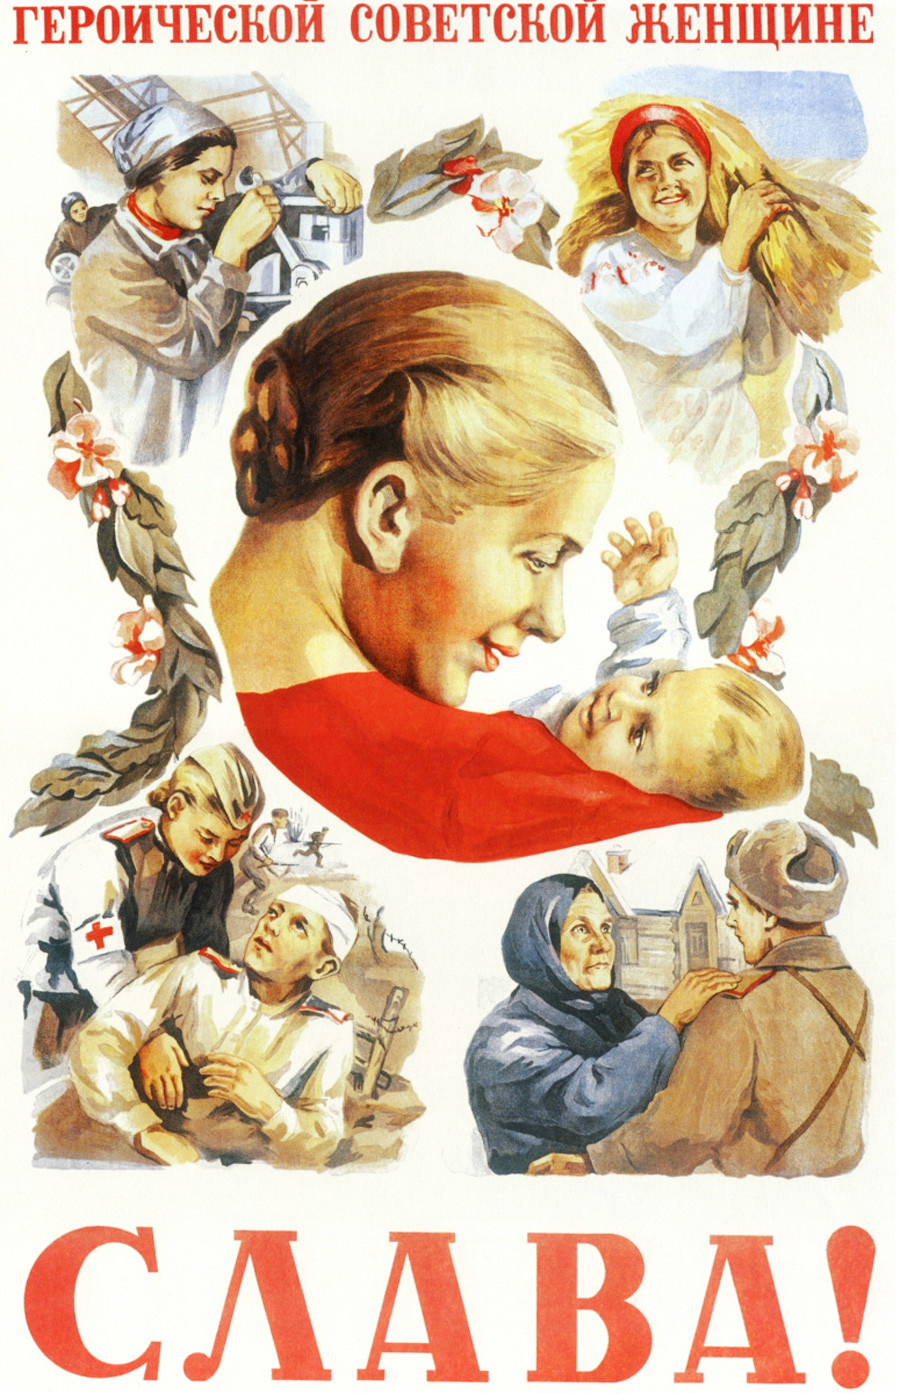 Glory to the  heroic Soviet woman
